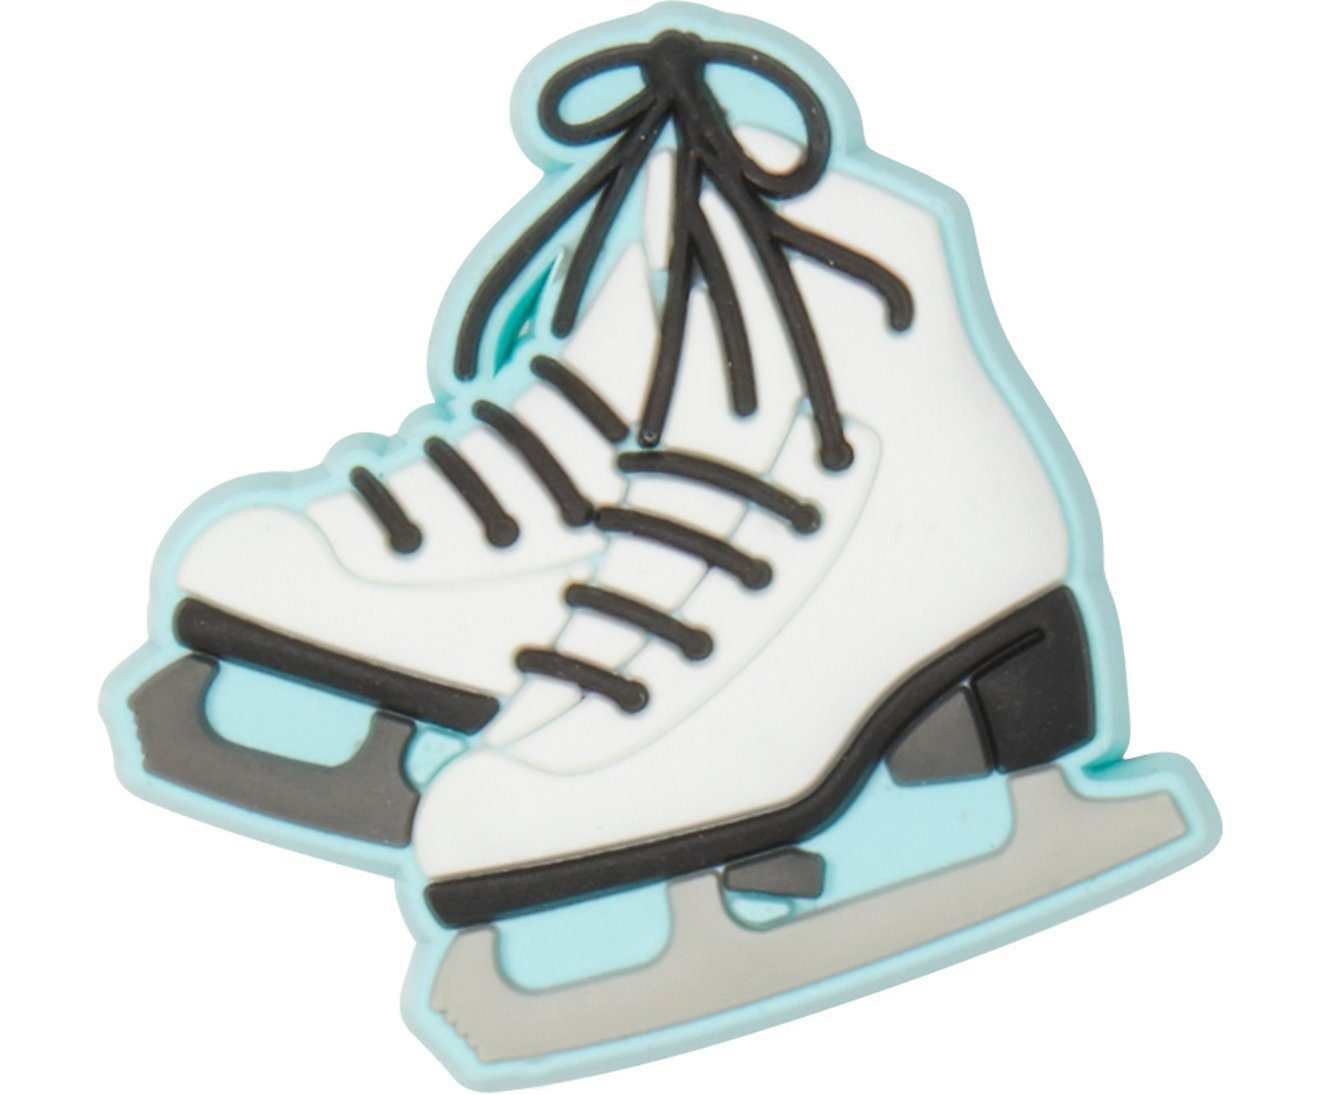 10007394 - Crocs Ice (1-tlg) - Charm Schuhanstecker Skates Jibbitz